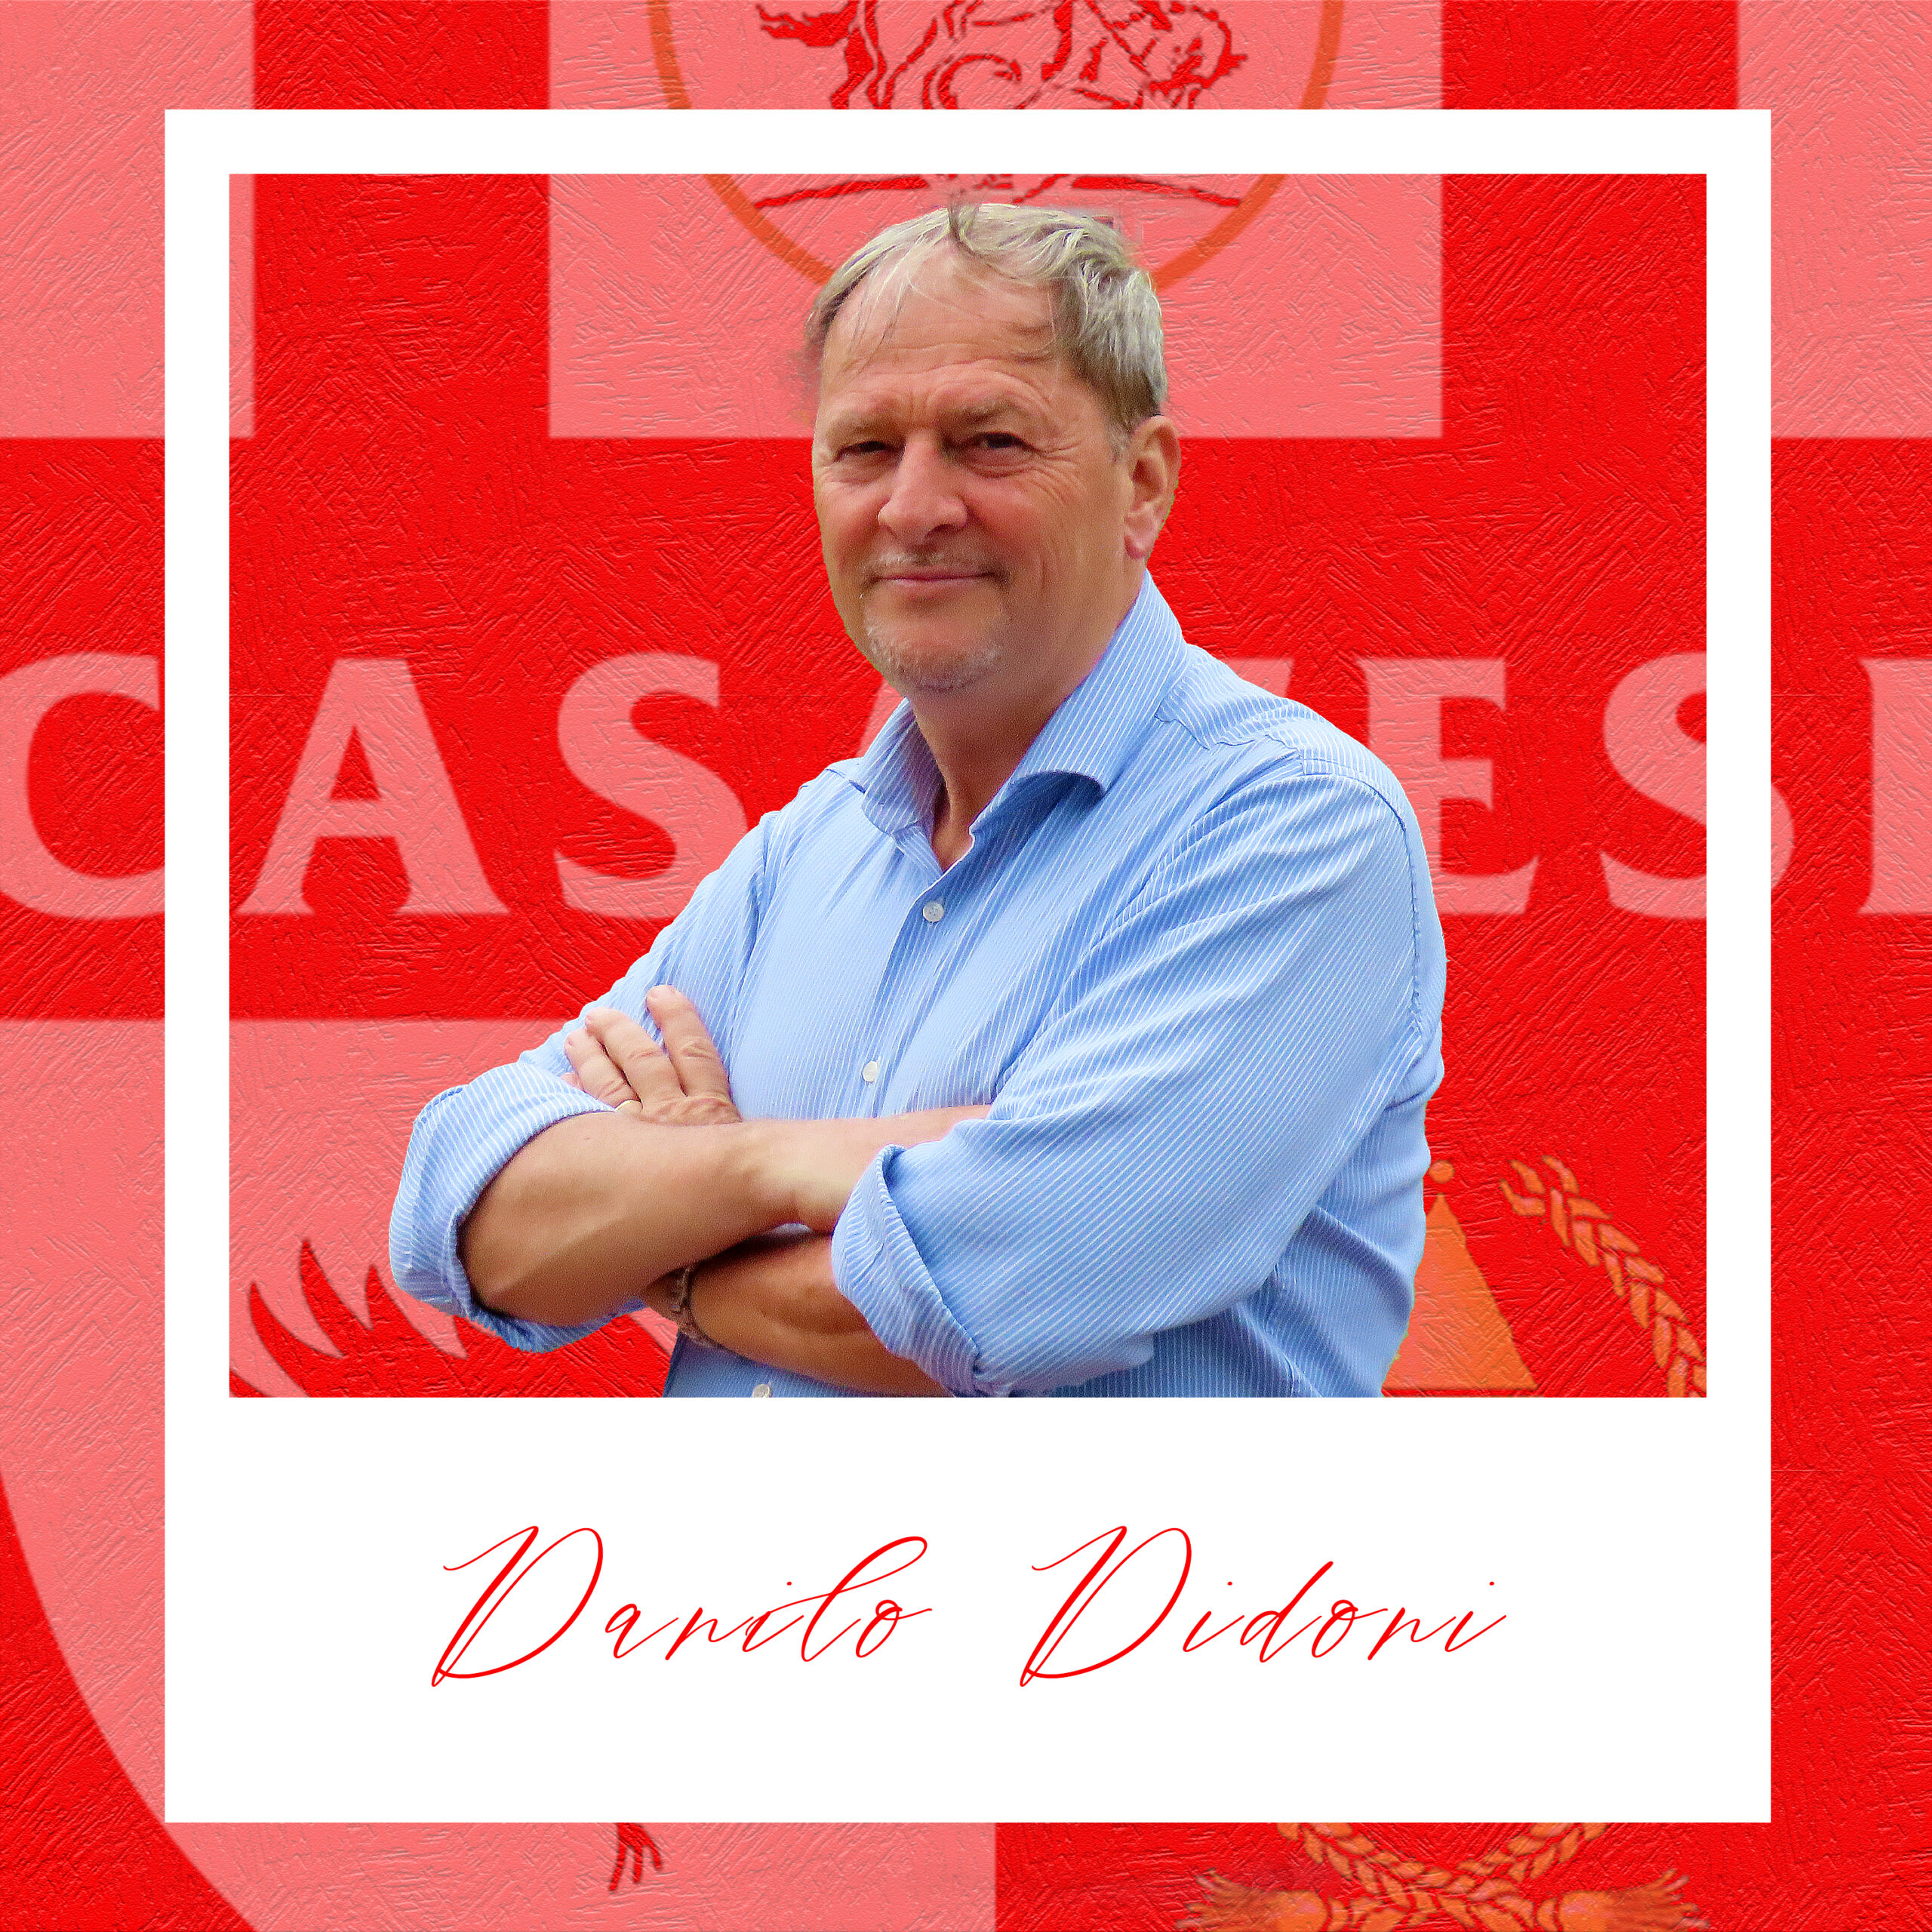 Team Manager Danilo Didoni